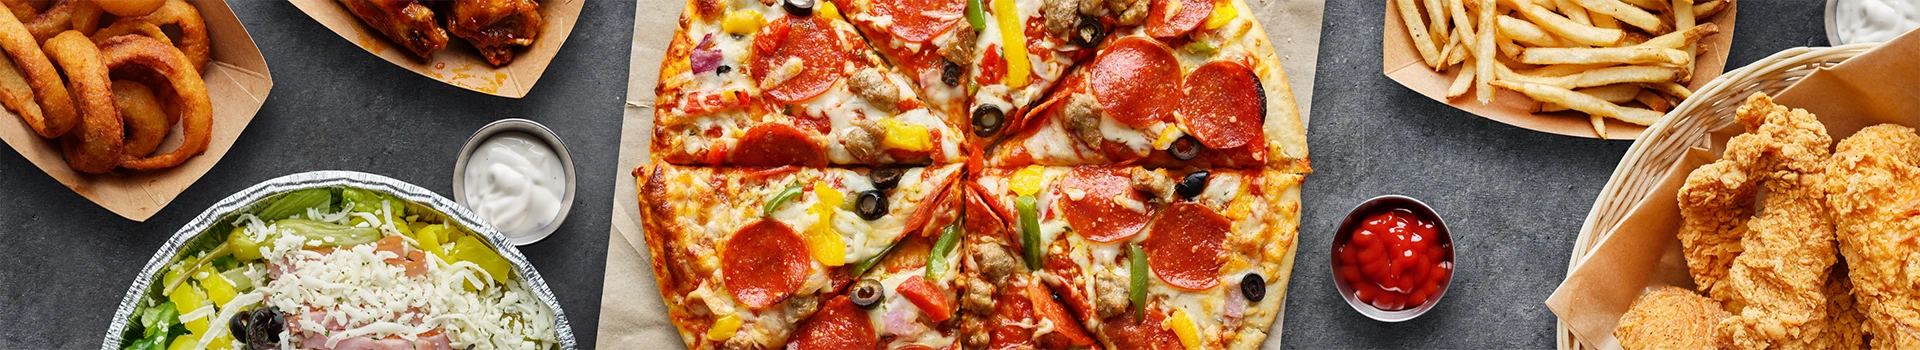 pizza i dania typu fastfood